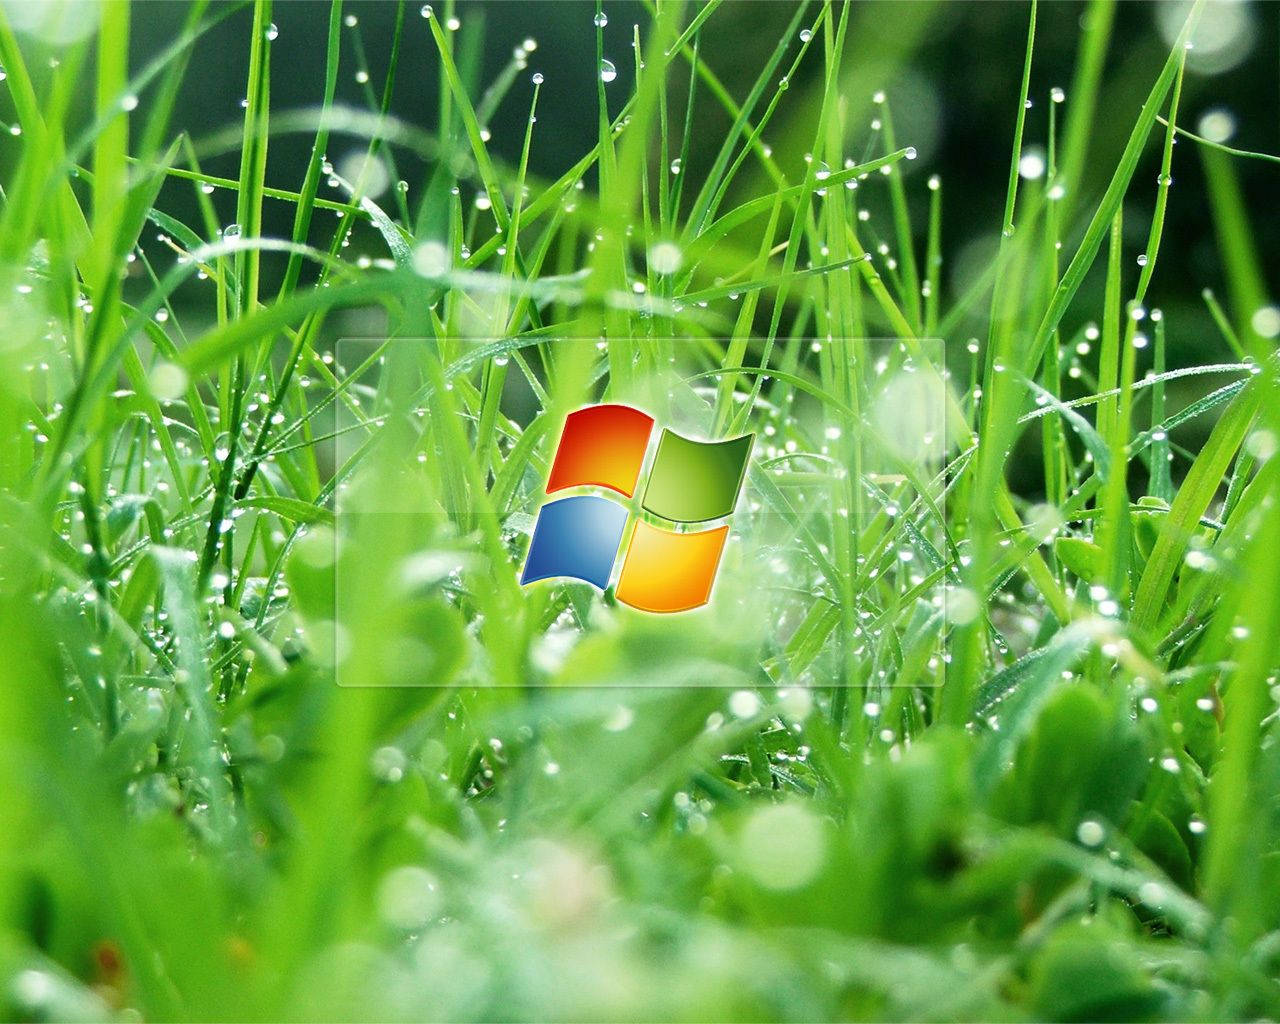 Windows Vista 1280X1024 Wallpaper and Background Image